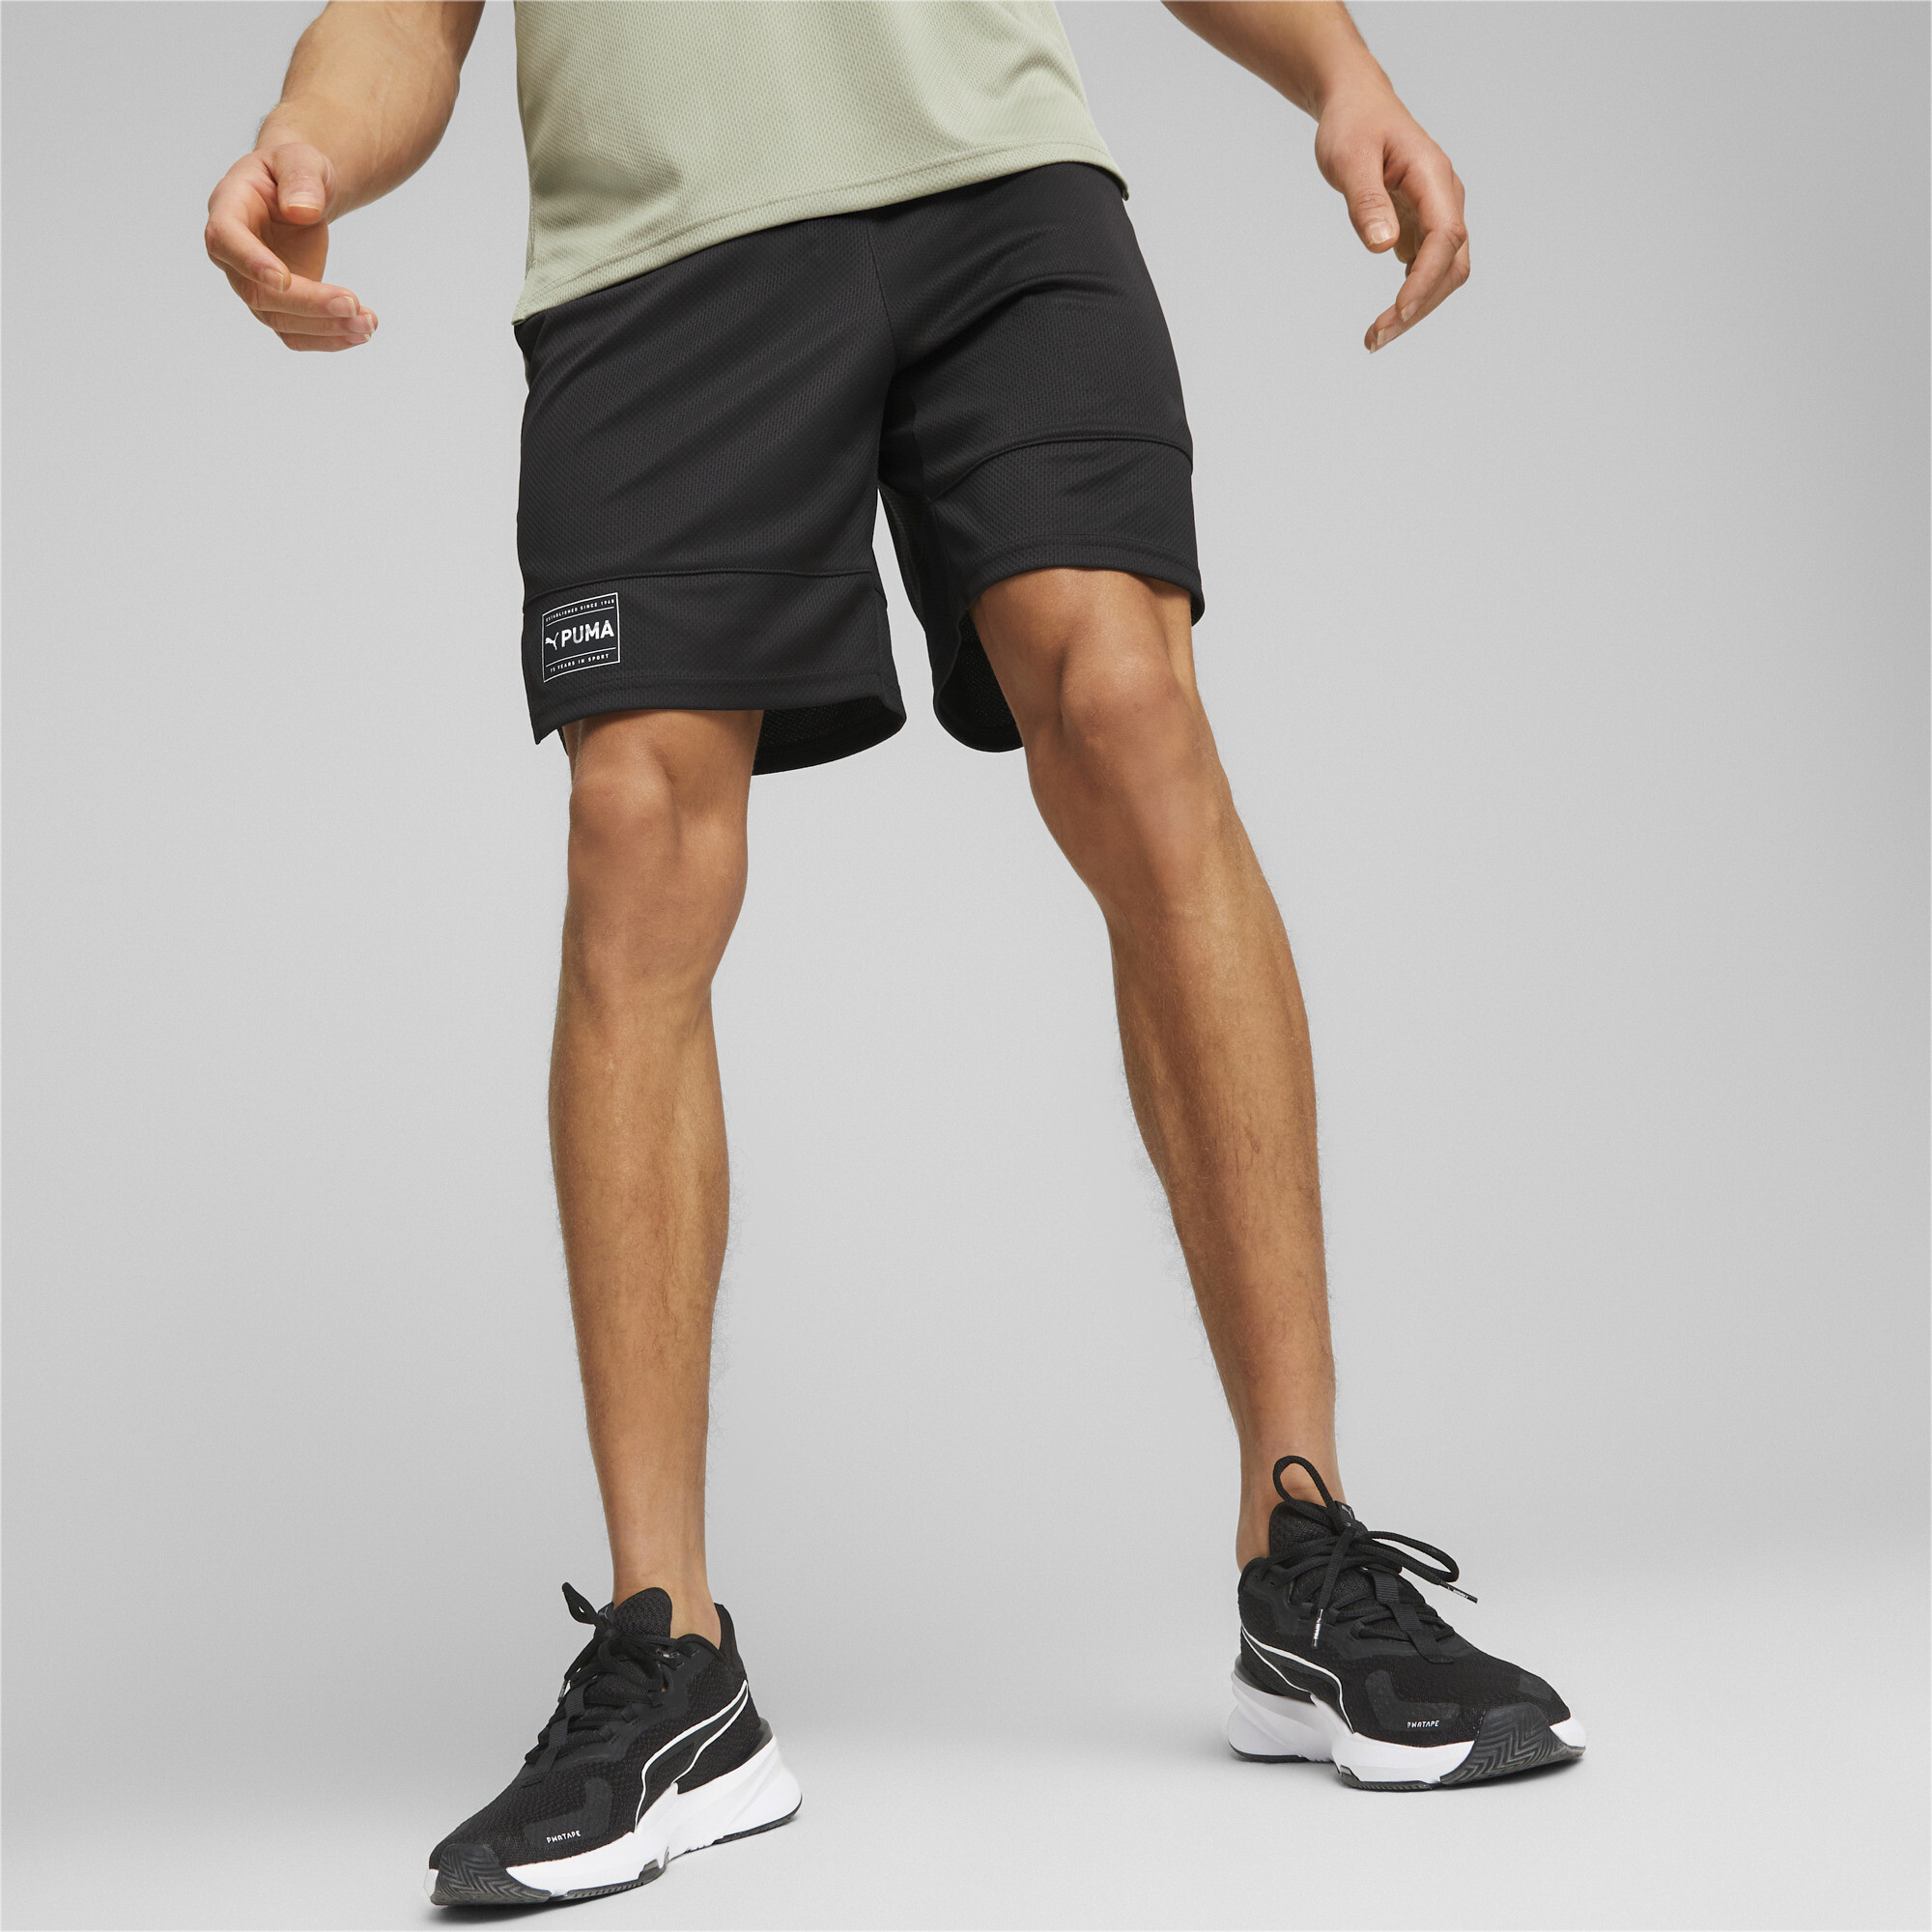 Men's PUMA Fit Ultrabreathe Training Shorts Men In Black, Size XS